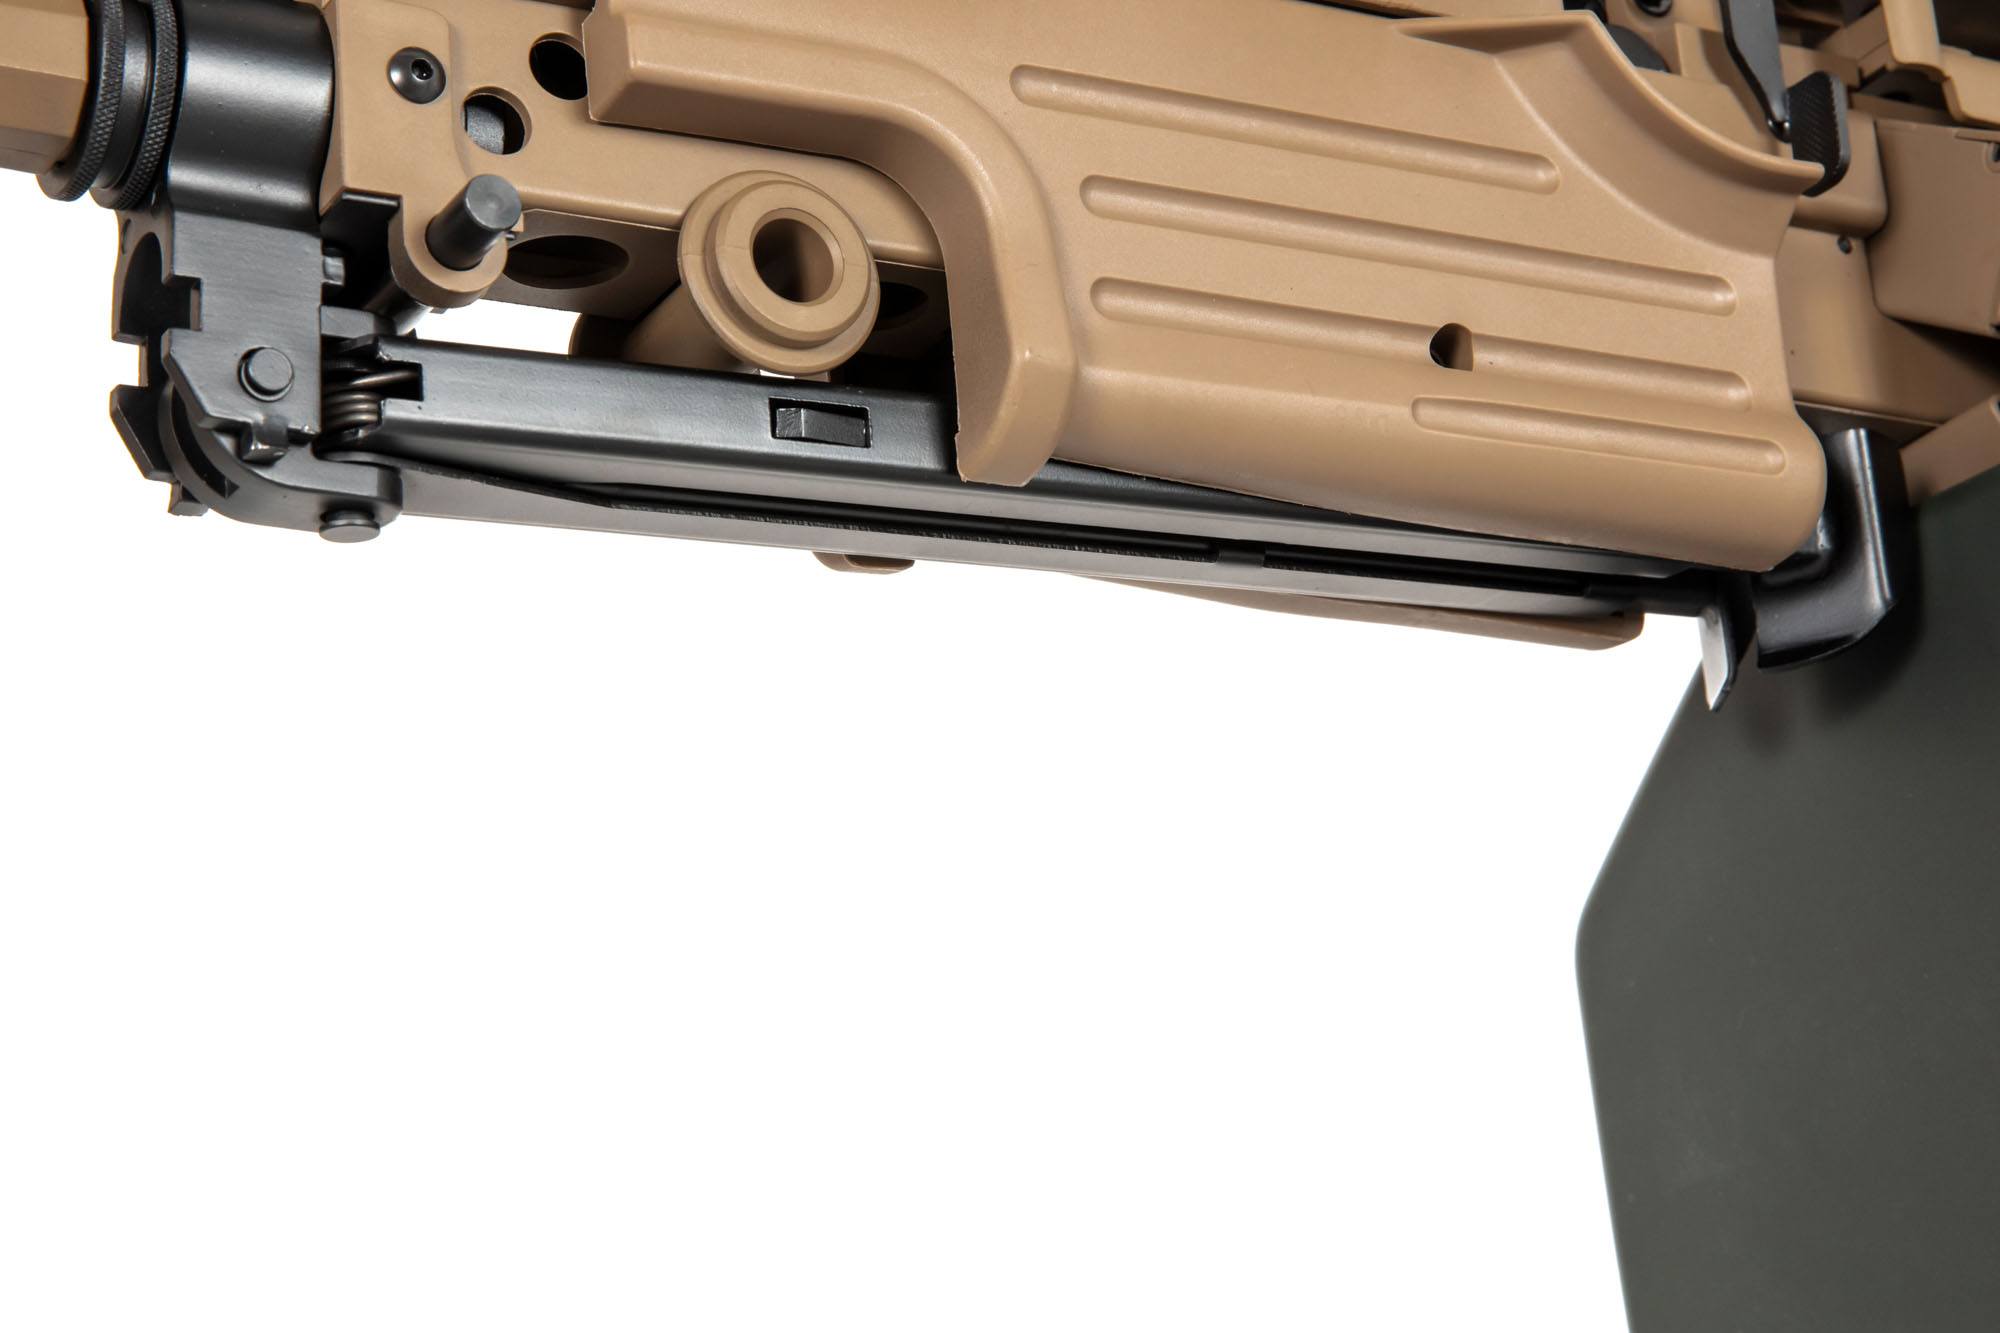 PARA SA-249 CORE ™ Machine Gun Replica - Tan by Specna Arms on Airsoft Mania Europe